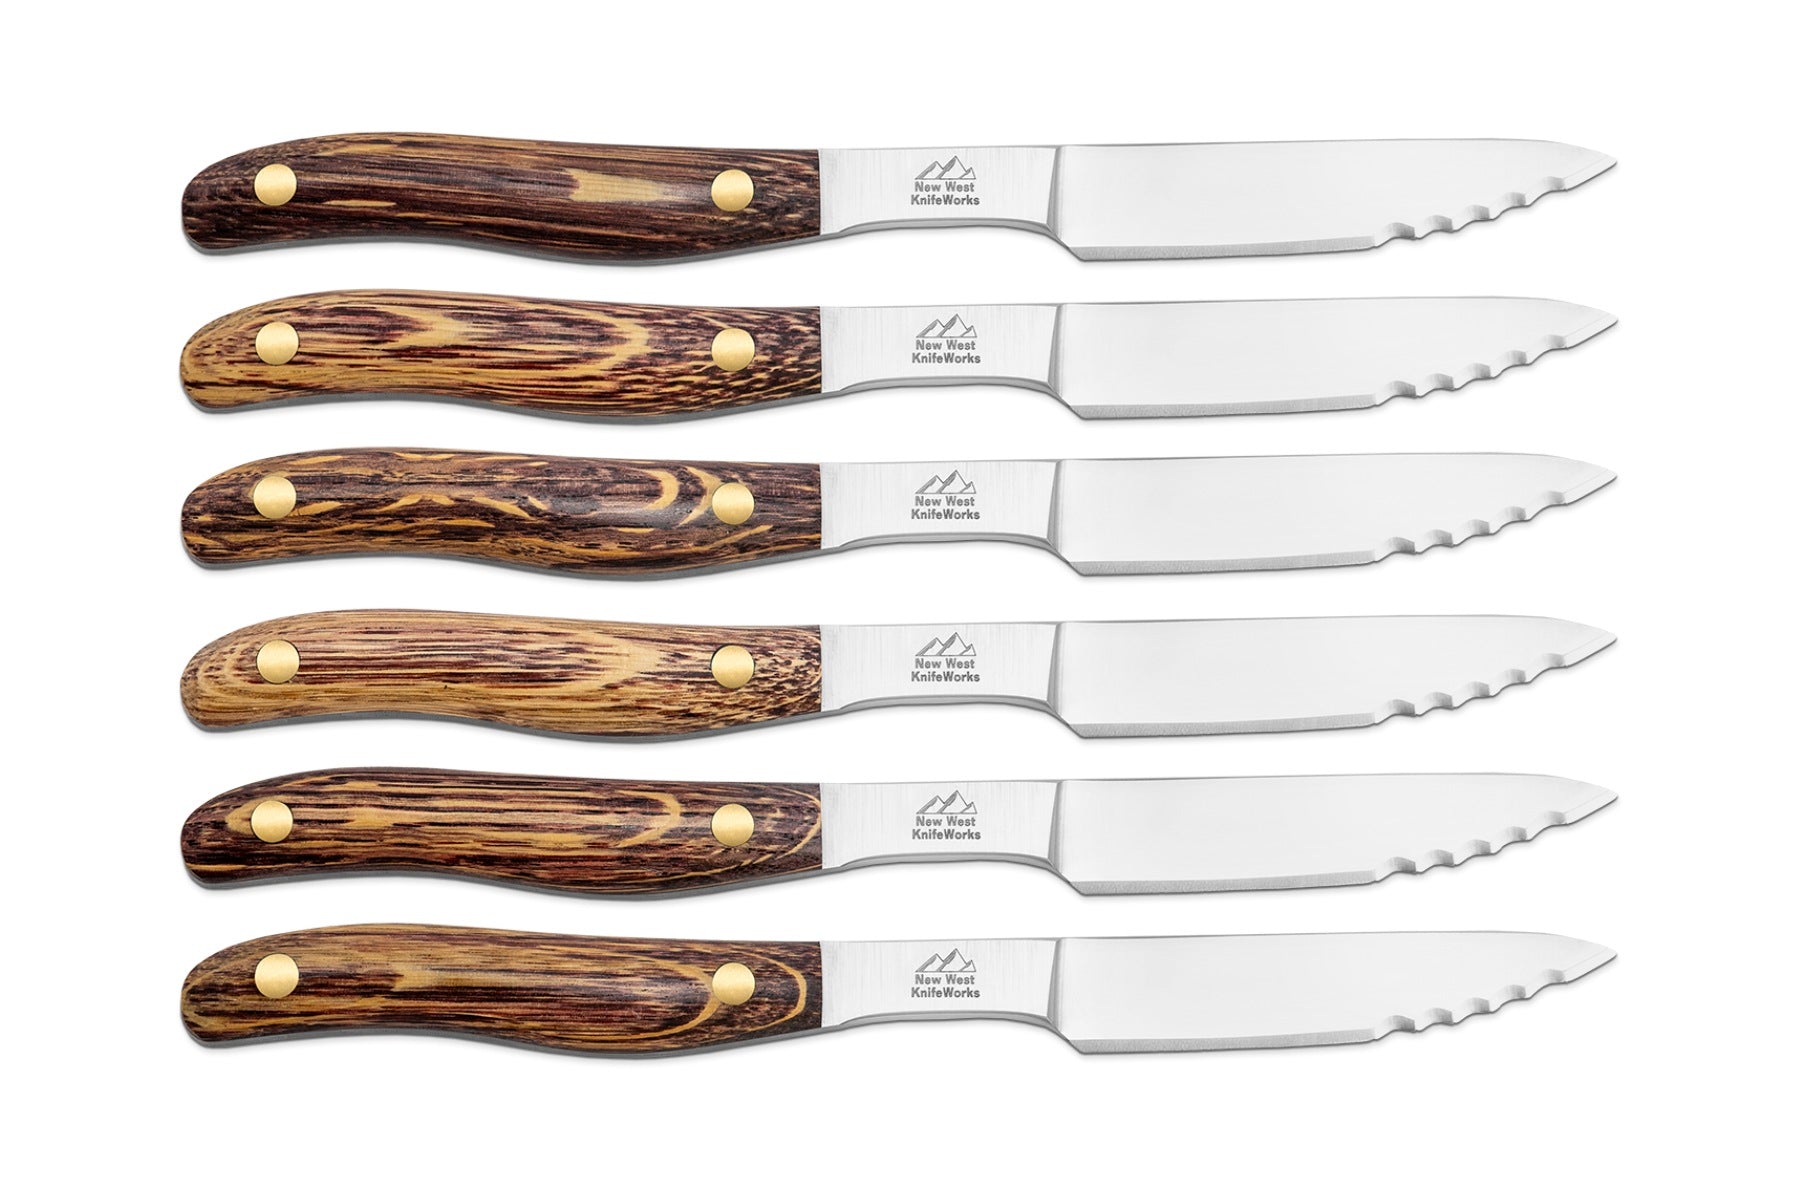 The Leading Steak Knife Sets (2023)